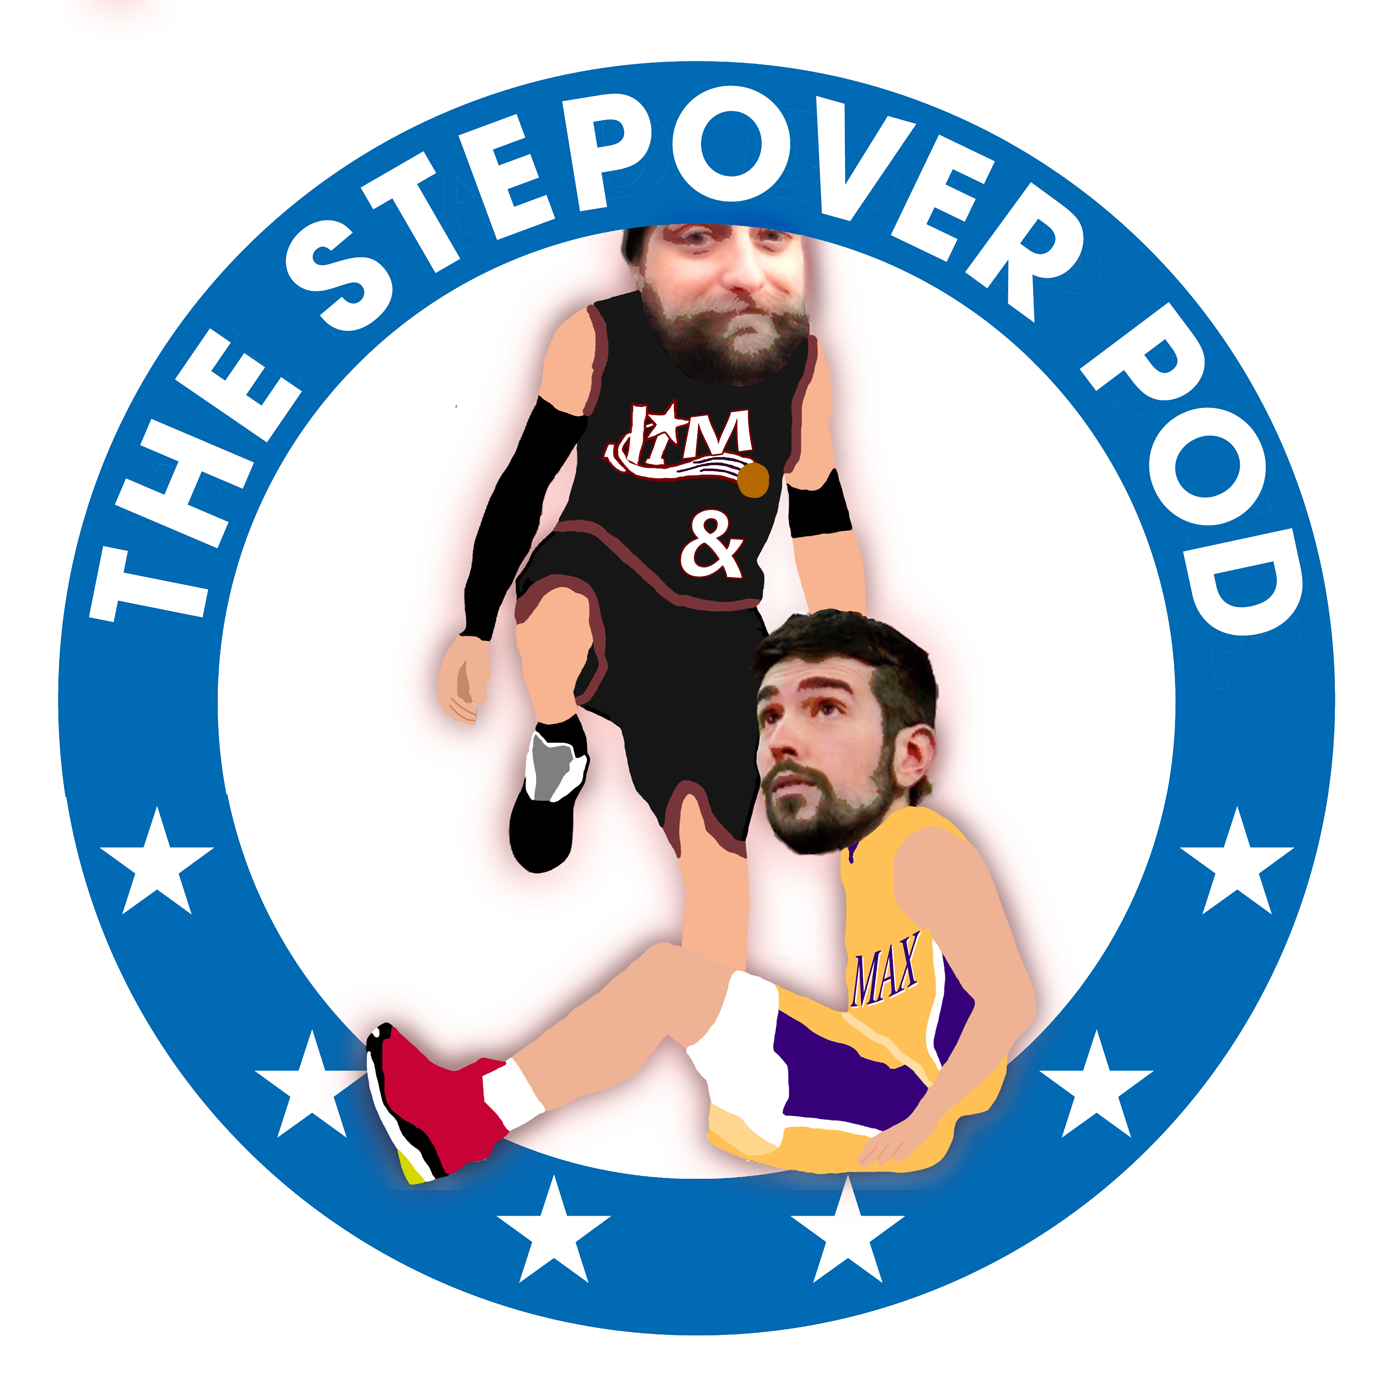 The-Stepover-Pod-logo-1400x1400